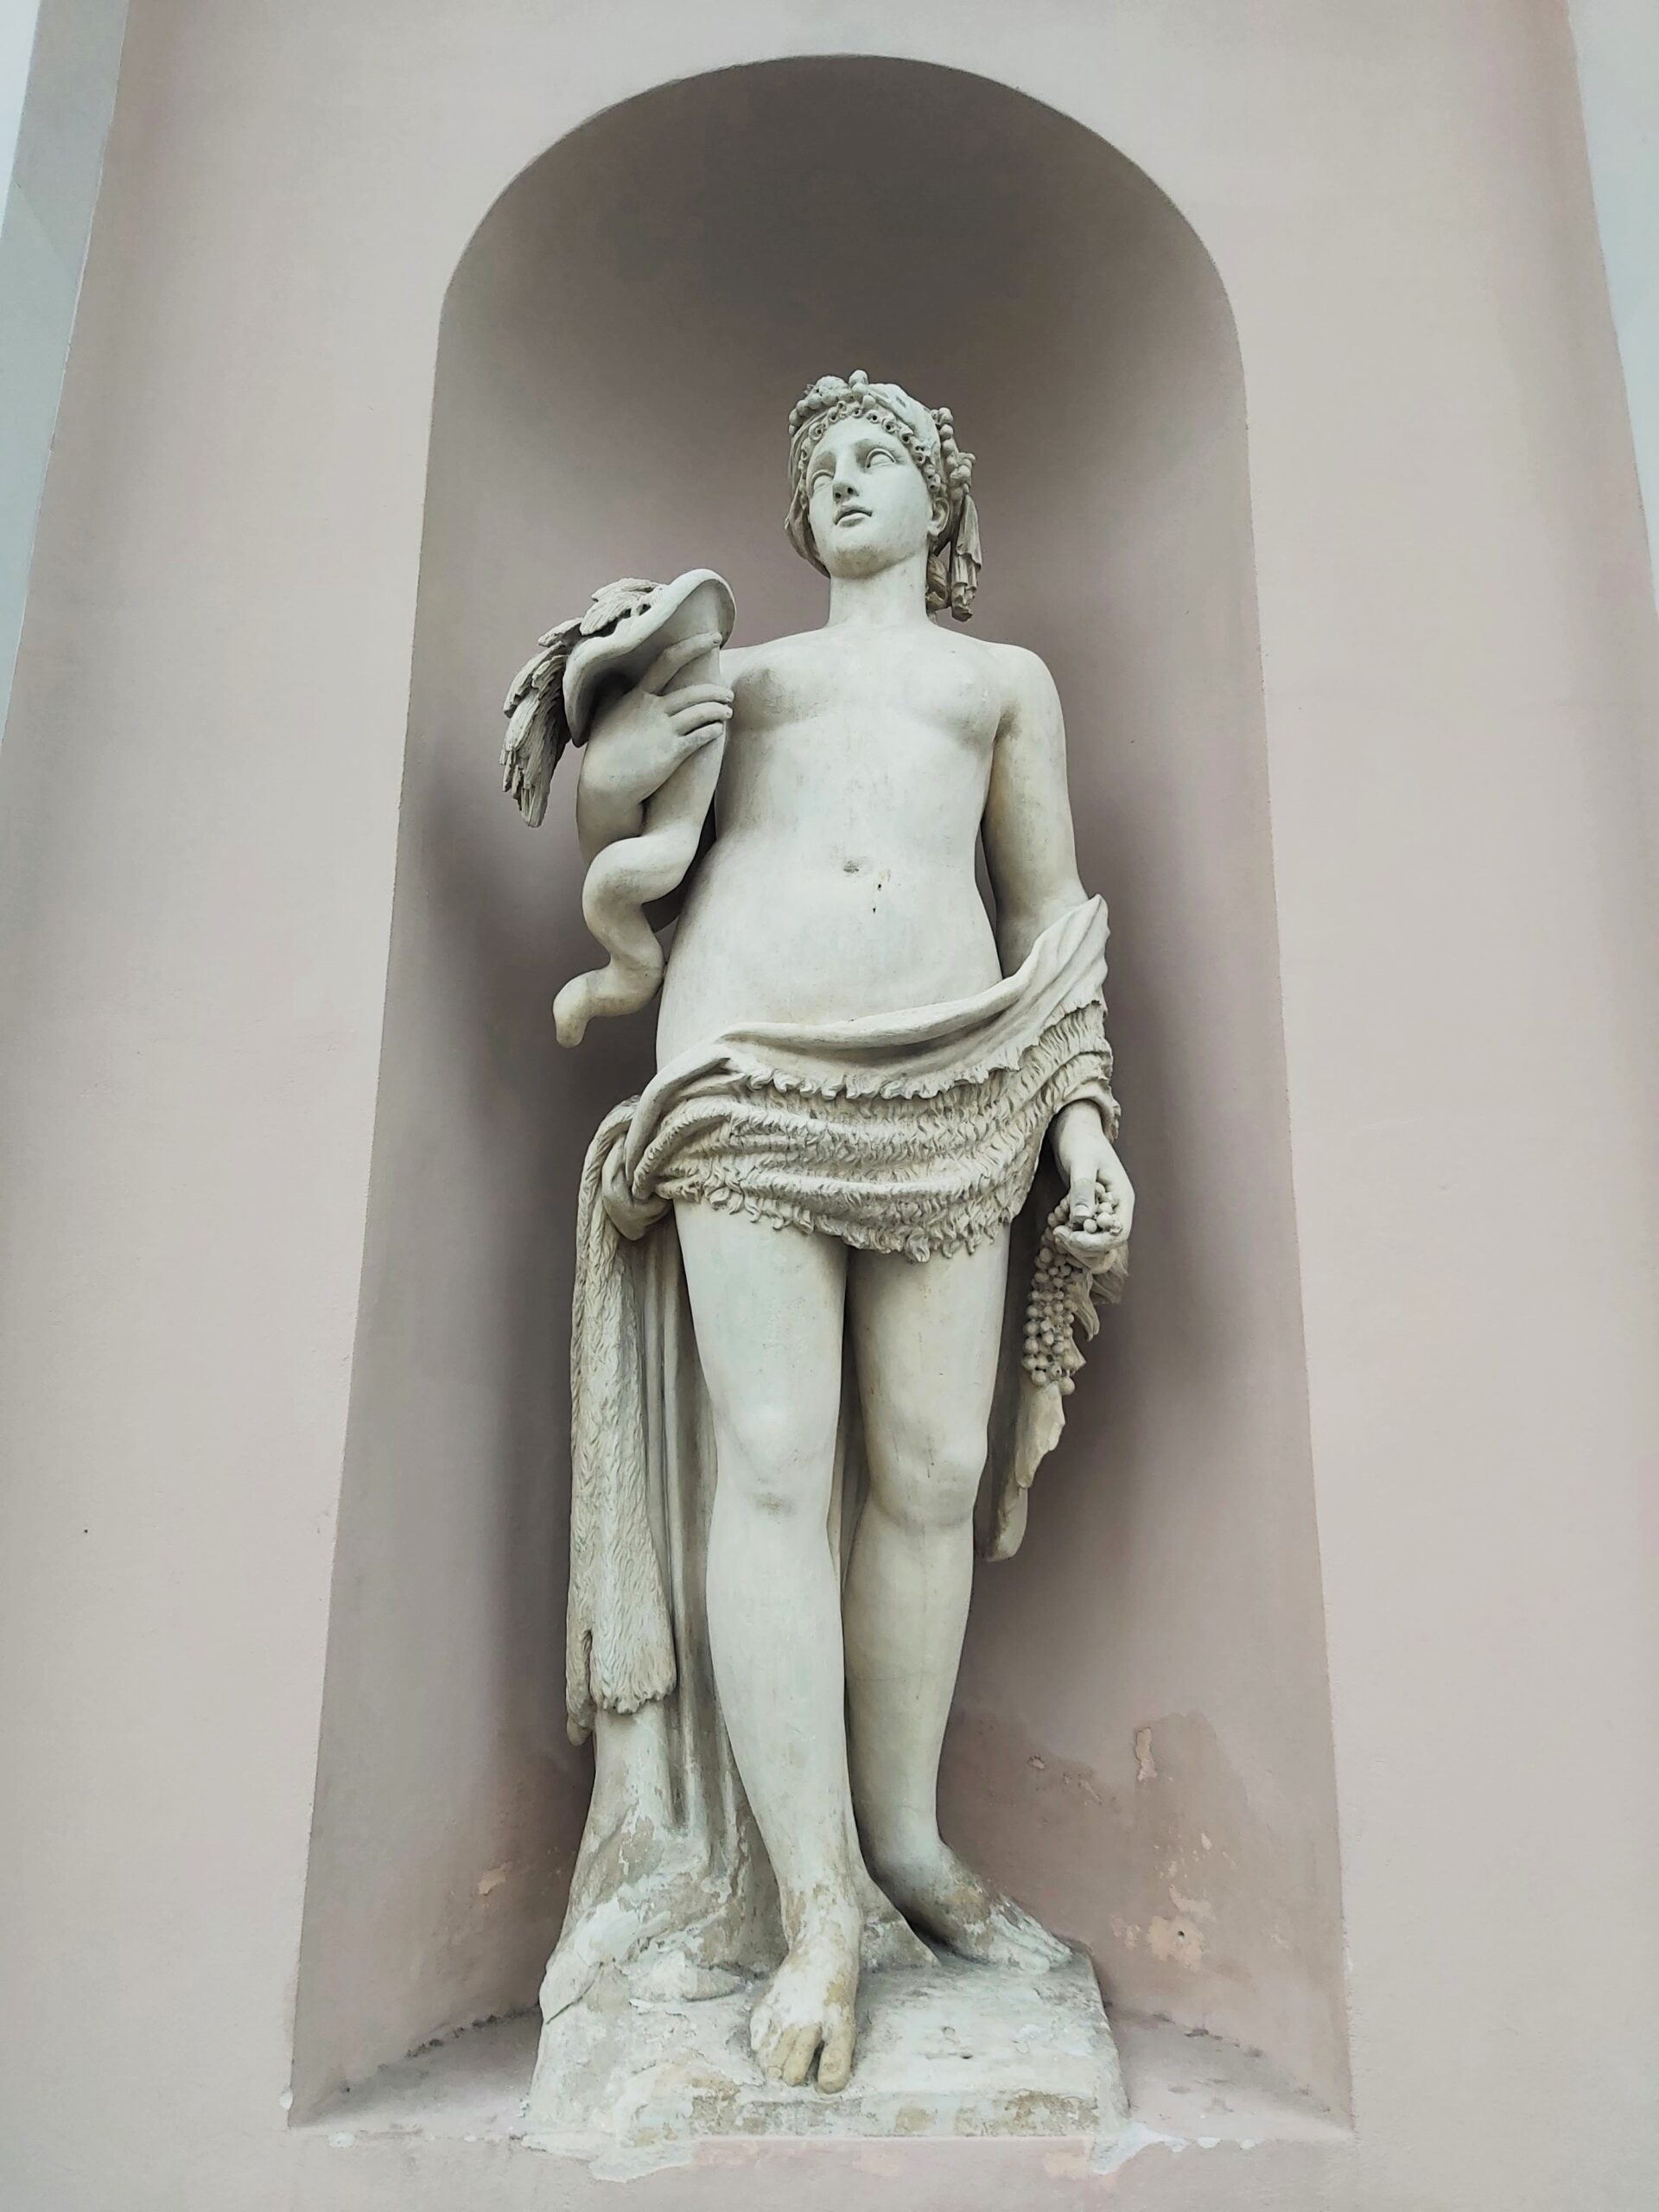 A female statue in Trieste, Italy